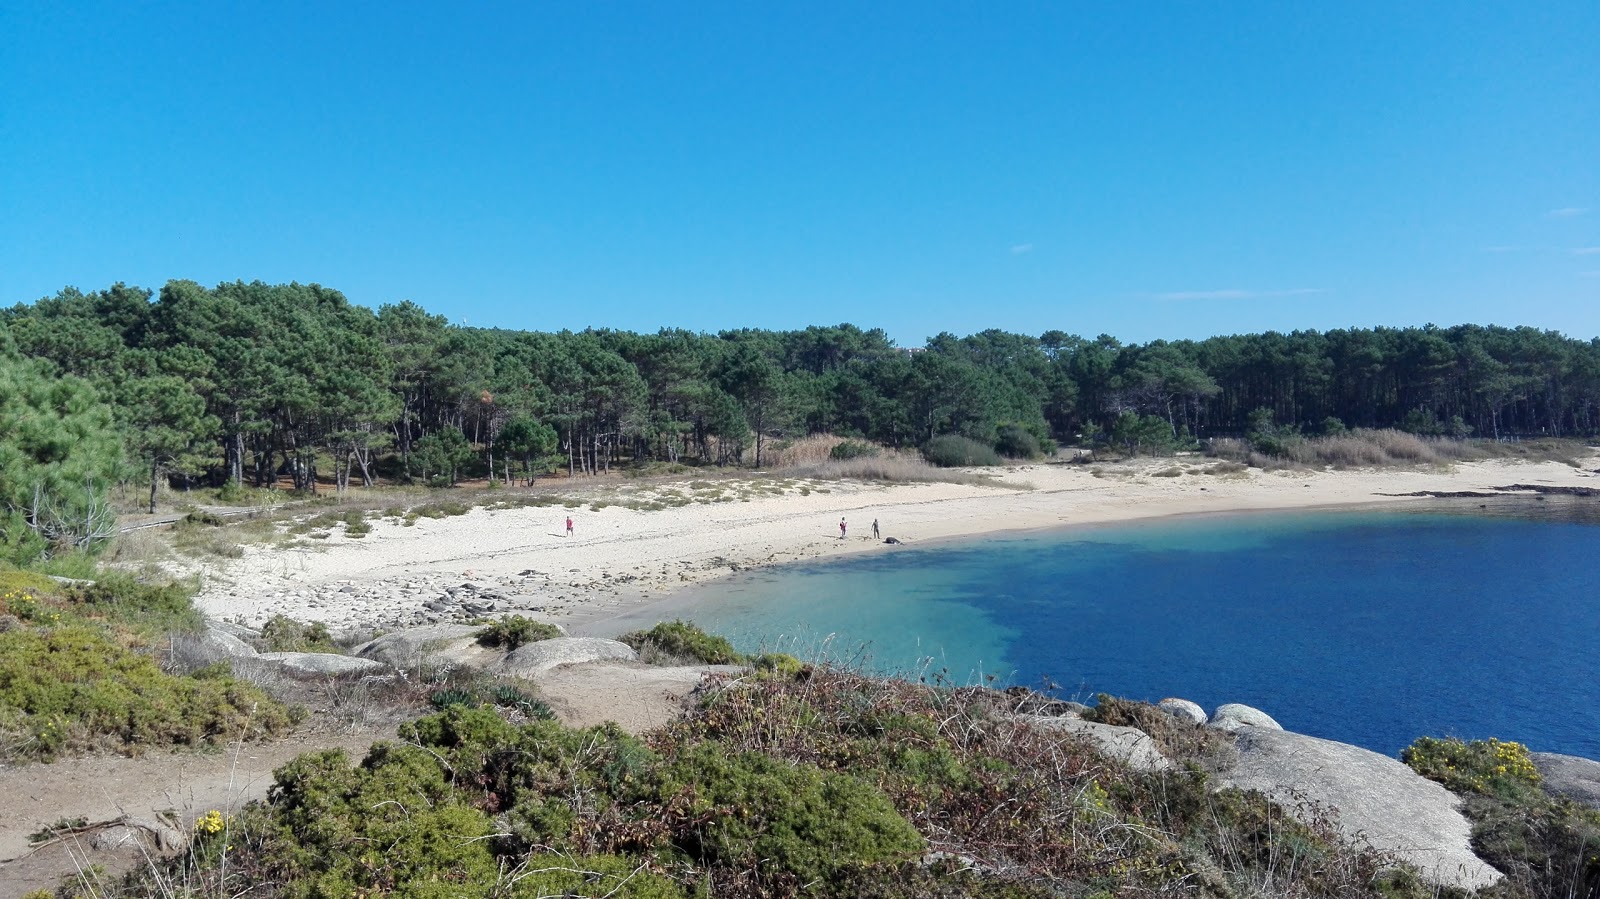 Fotografija Canelas beach nahaja se v naravnem okolju